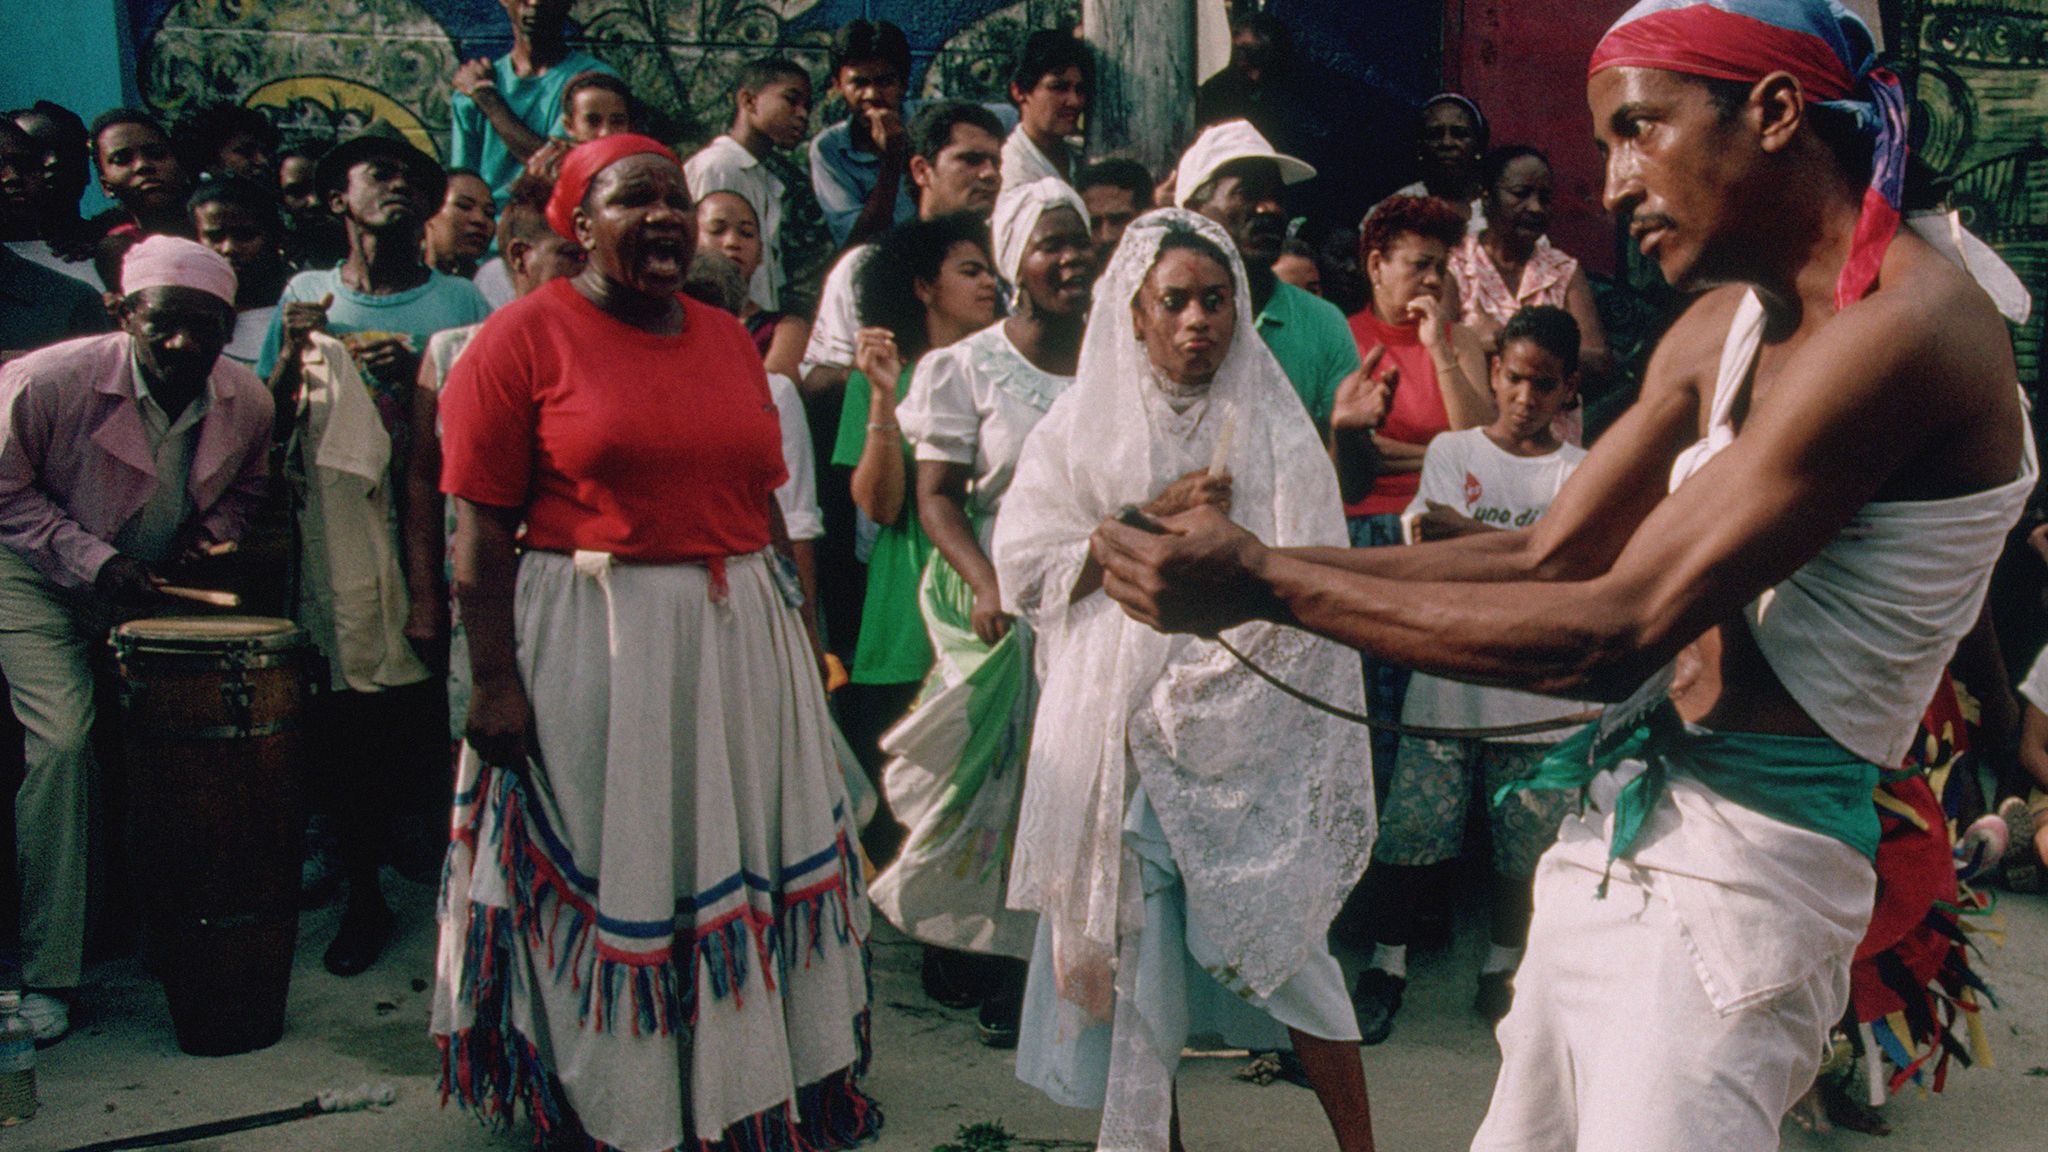 La santería de Cuba - Culte des divinités et rituels